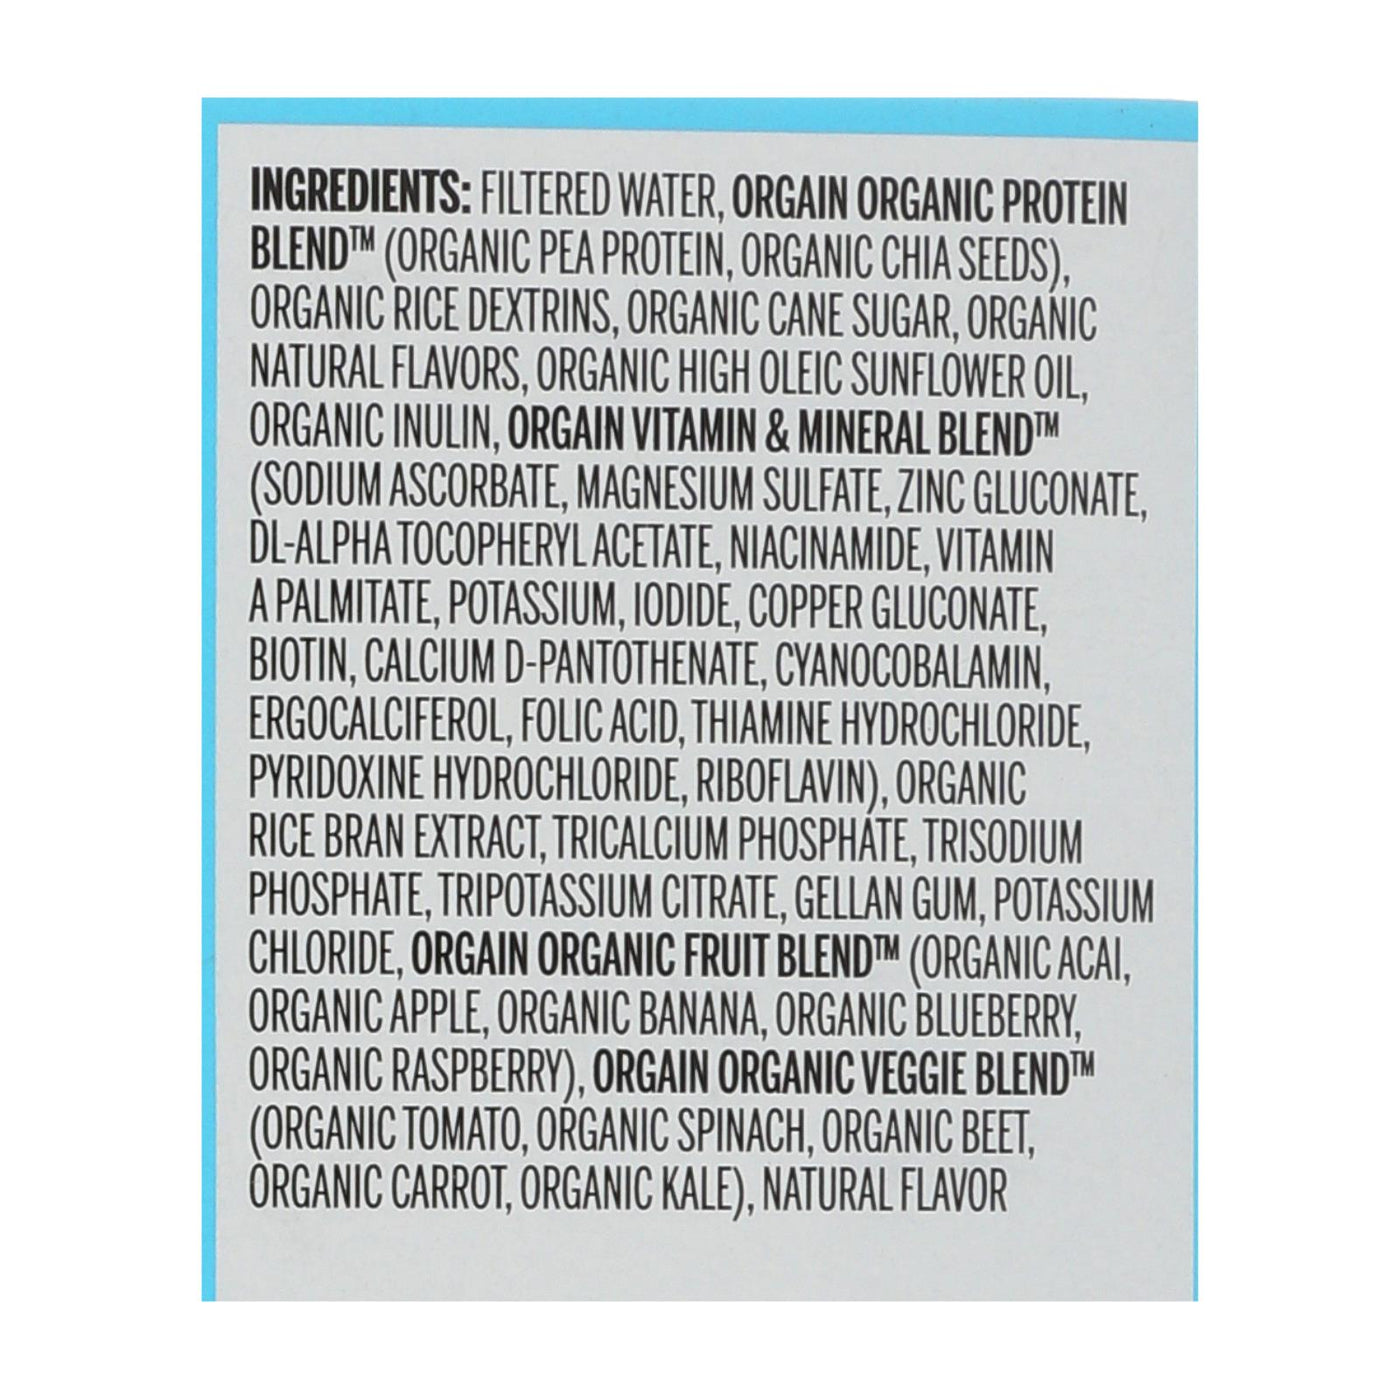 Orgain Organic Vegan Nutrition Shakes - Vanilla - Case Of 3 - 4-11 Fz | OnlyNaturals.us